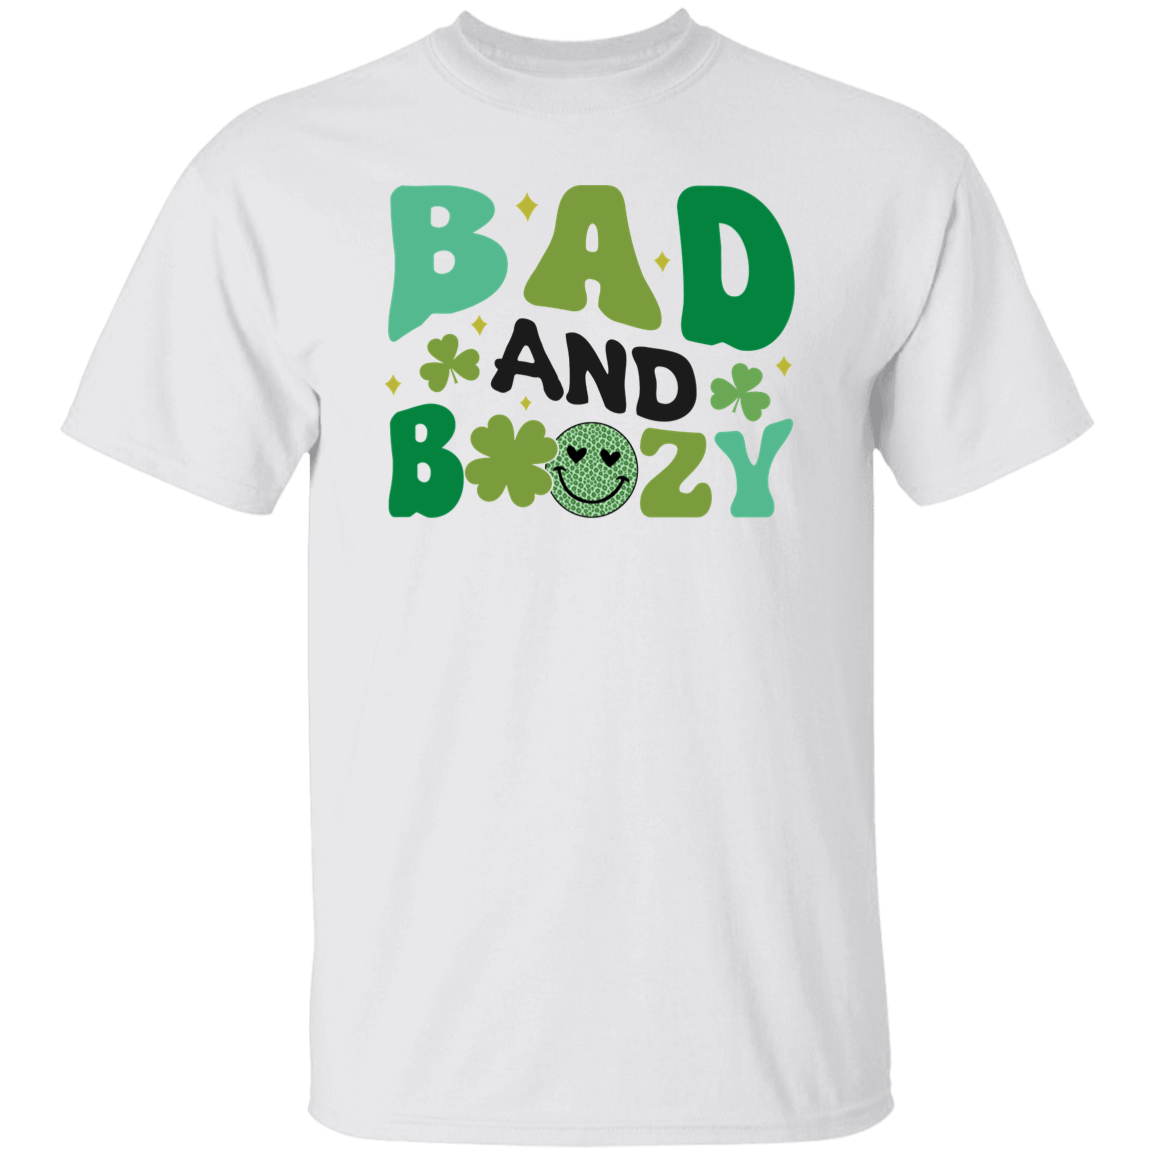 Bad and Boozy T-Shirt